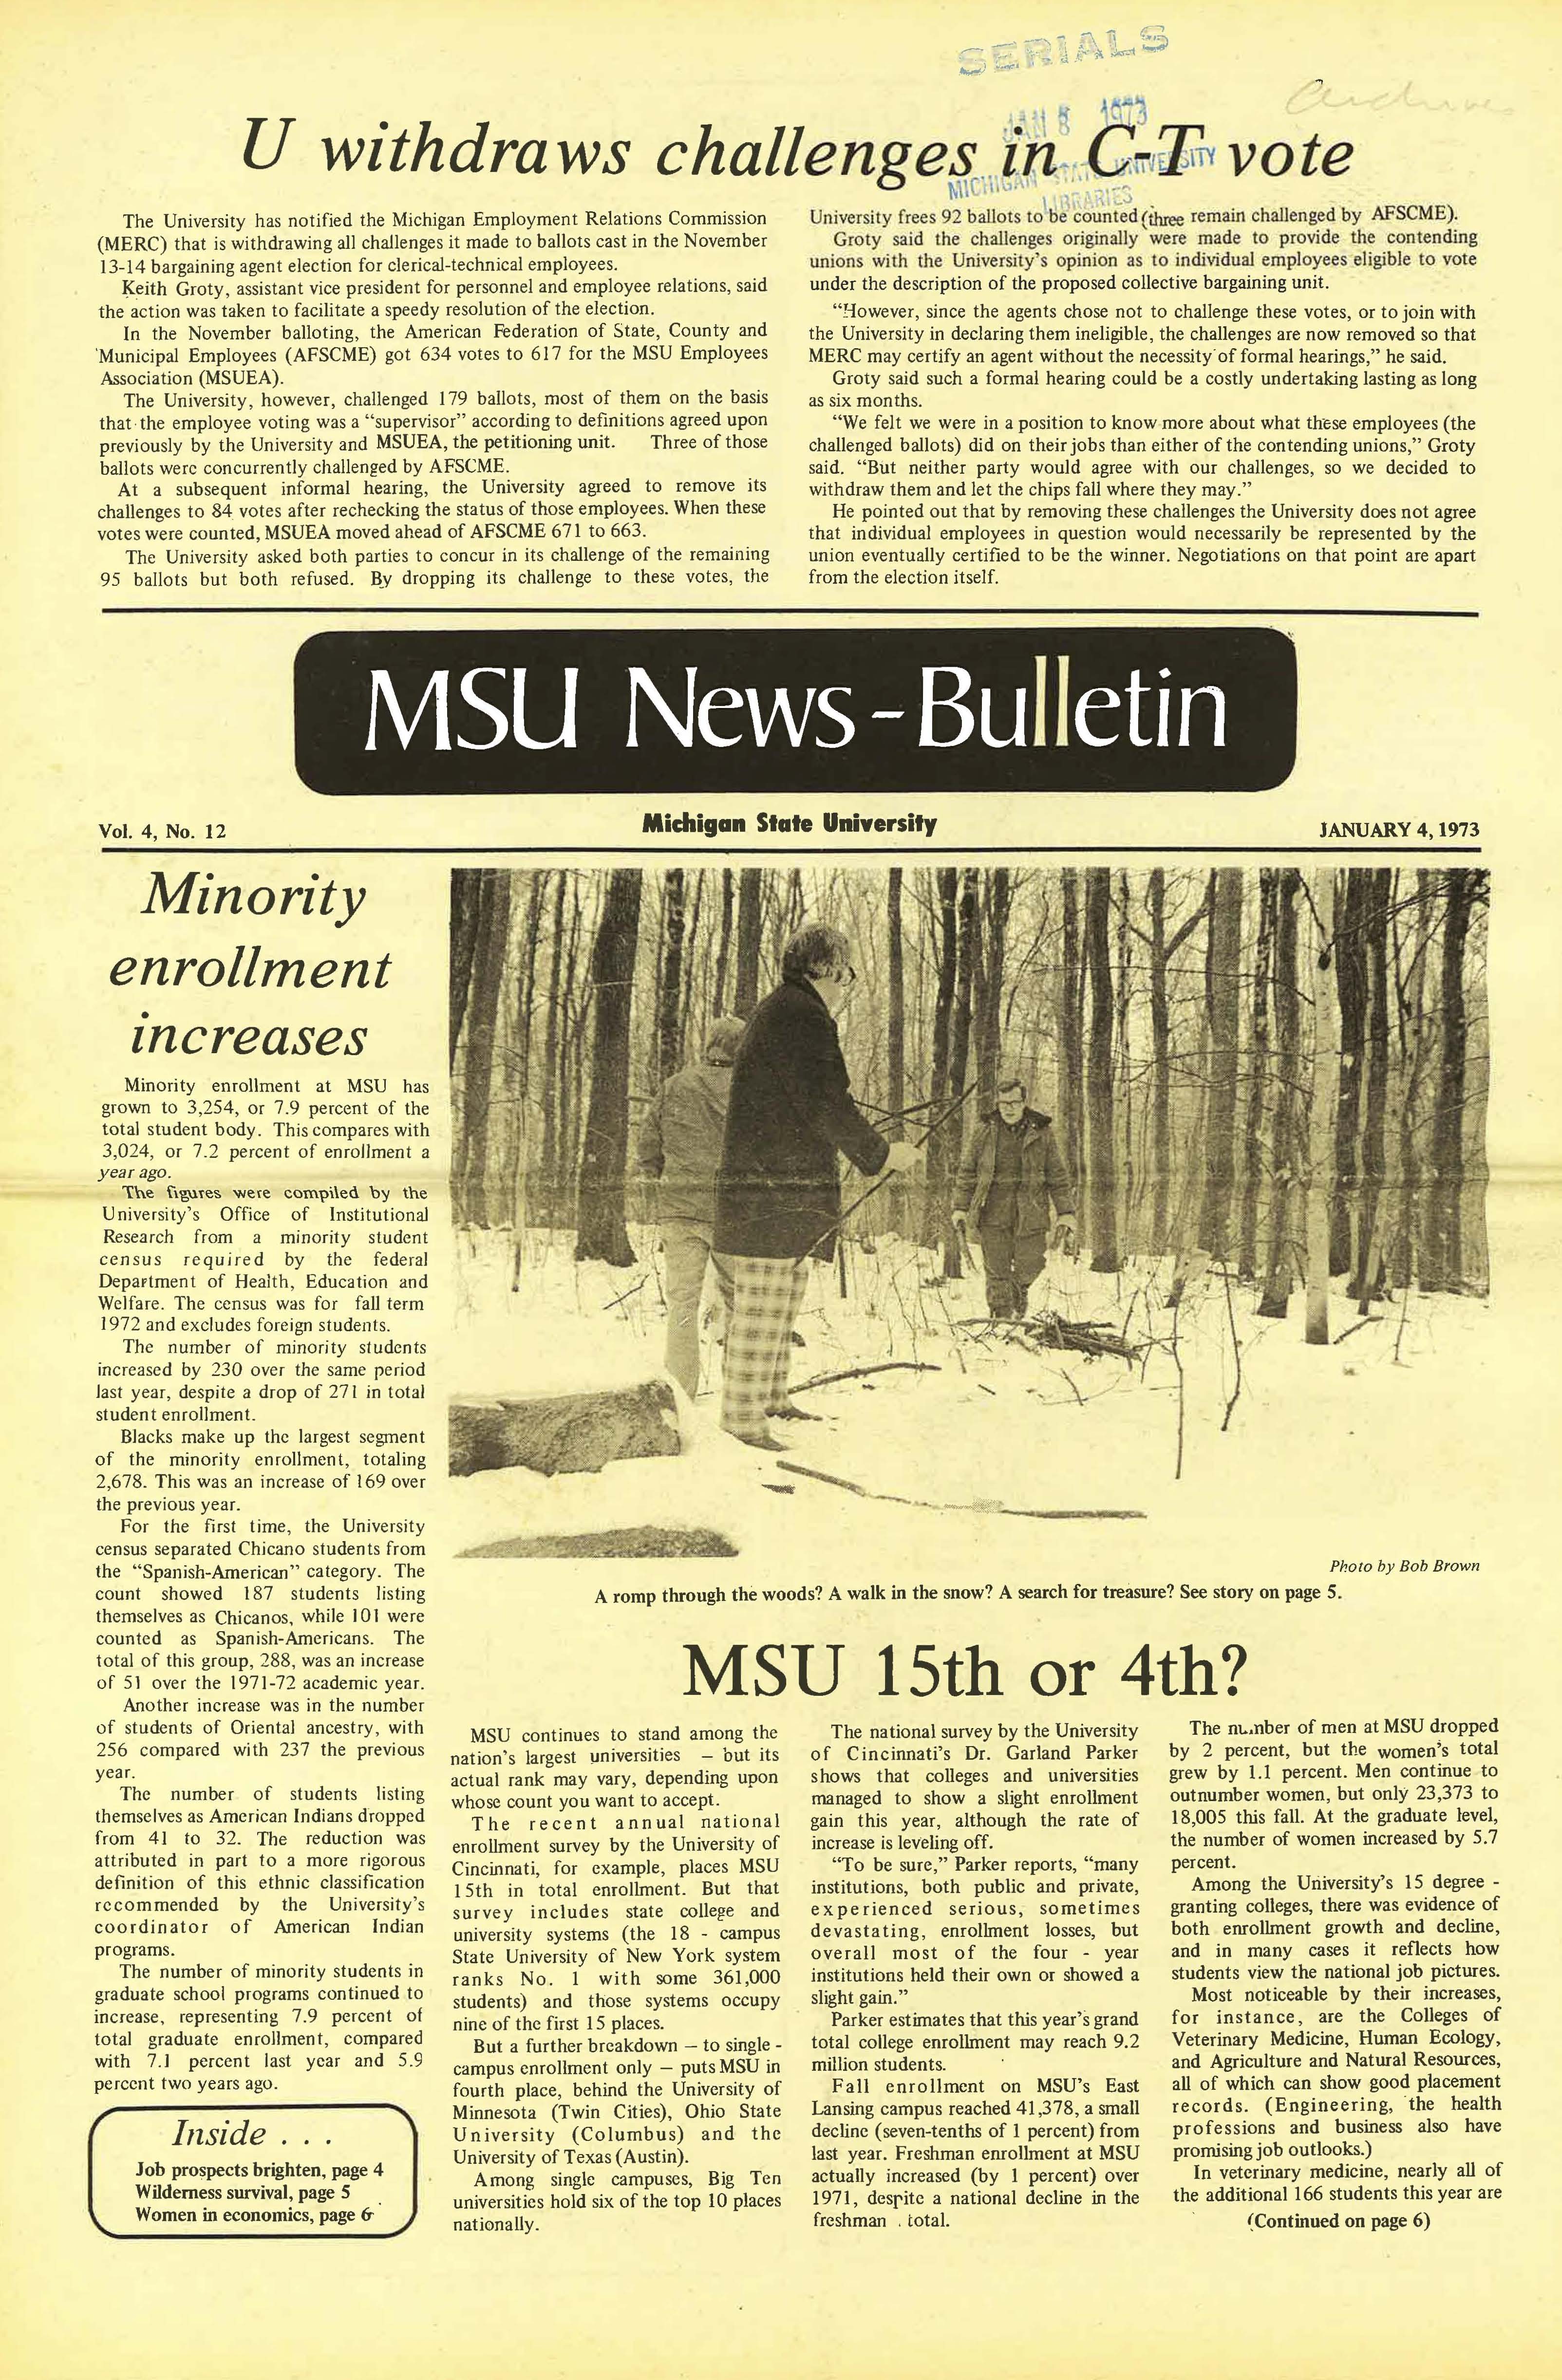 MSU News Bulletin, vol. 4, No. 34, July 12, 1973